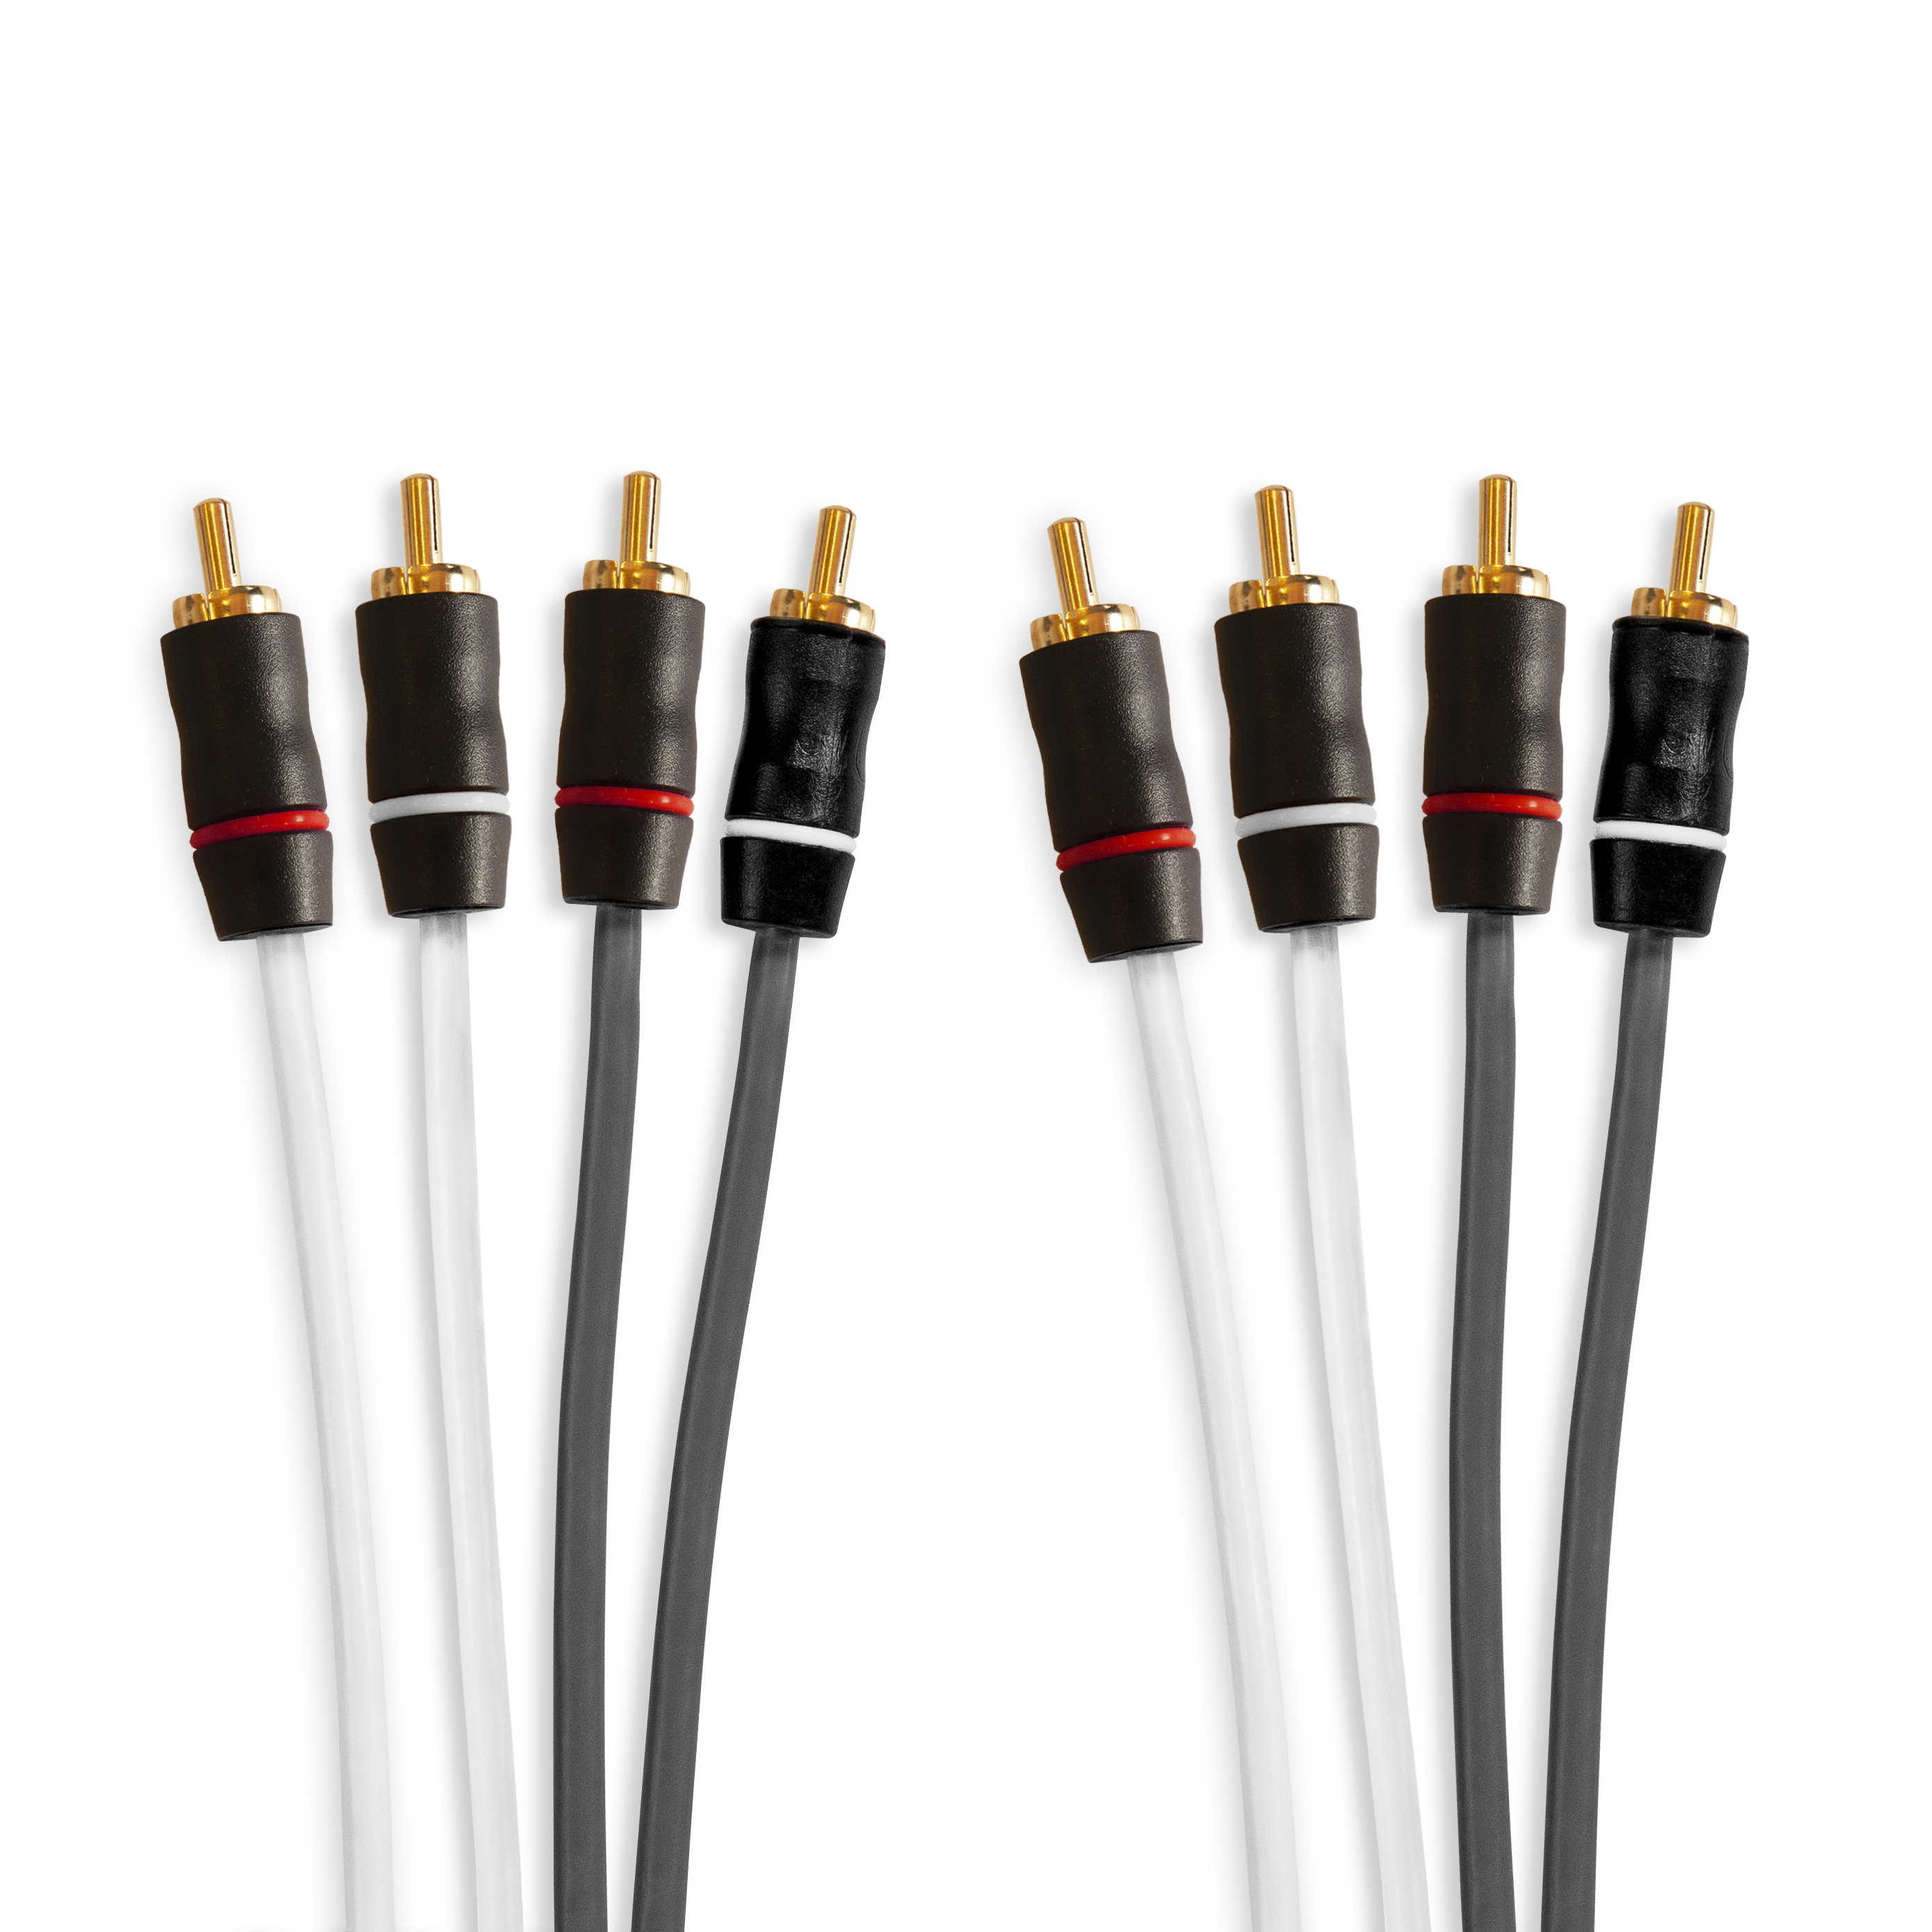 Garmin Fusion® RCA kabler, 4 kanaler, 12 fod (3,66 m) kabel